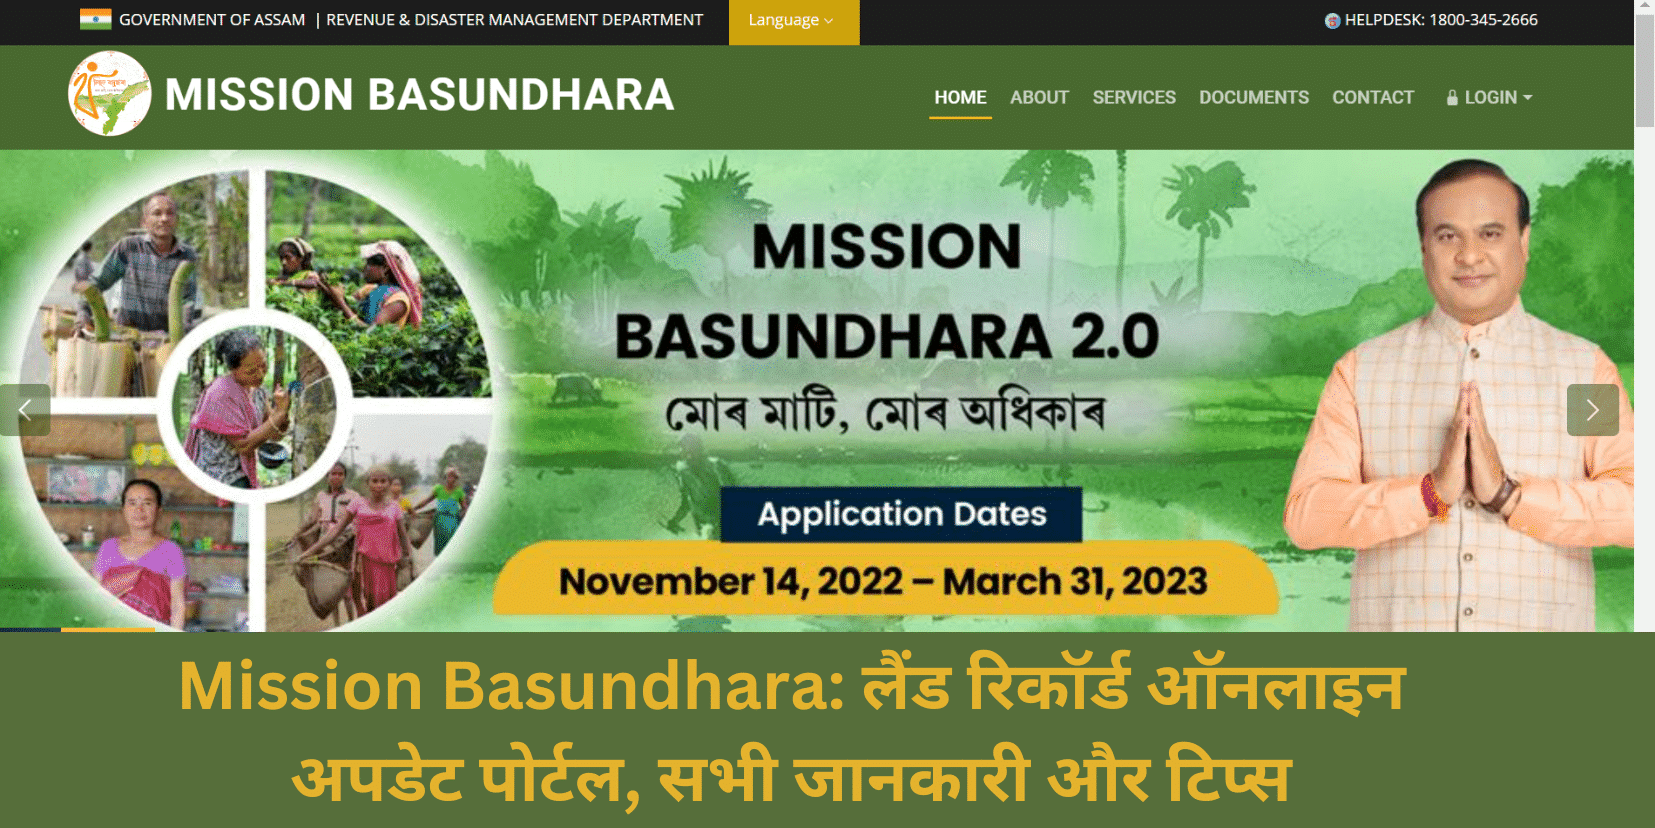 Mission basundhara